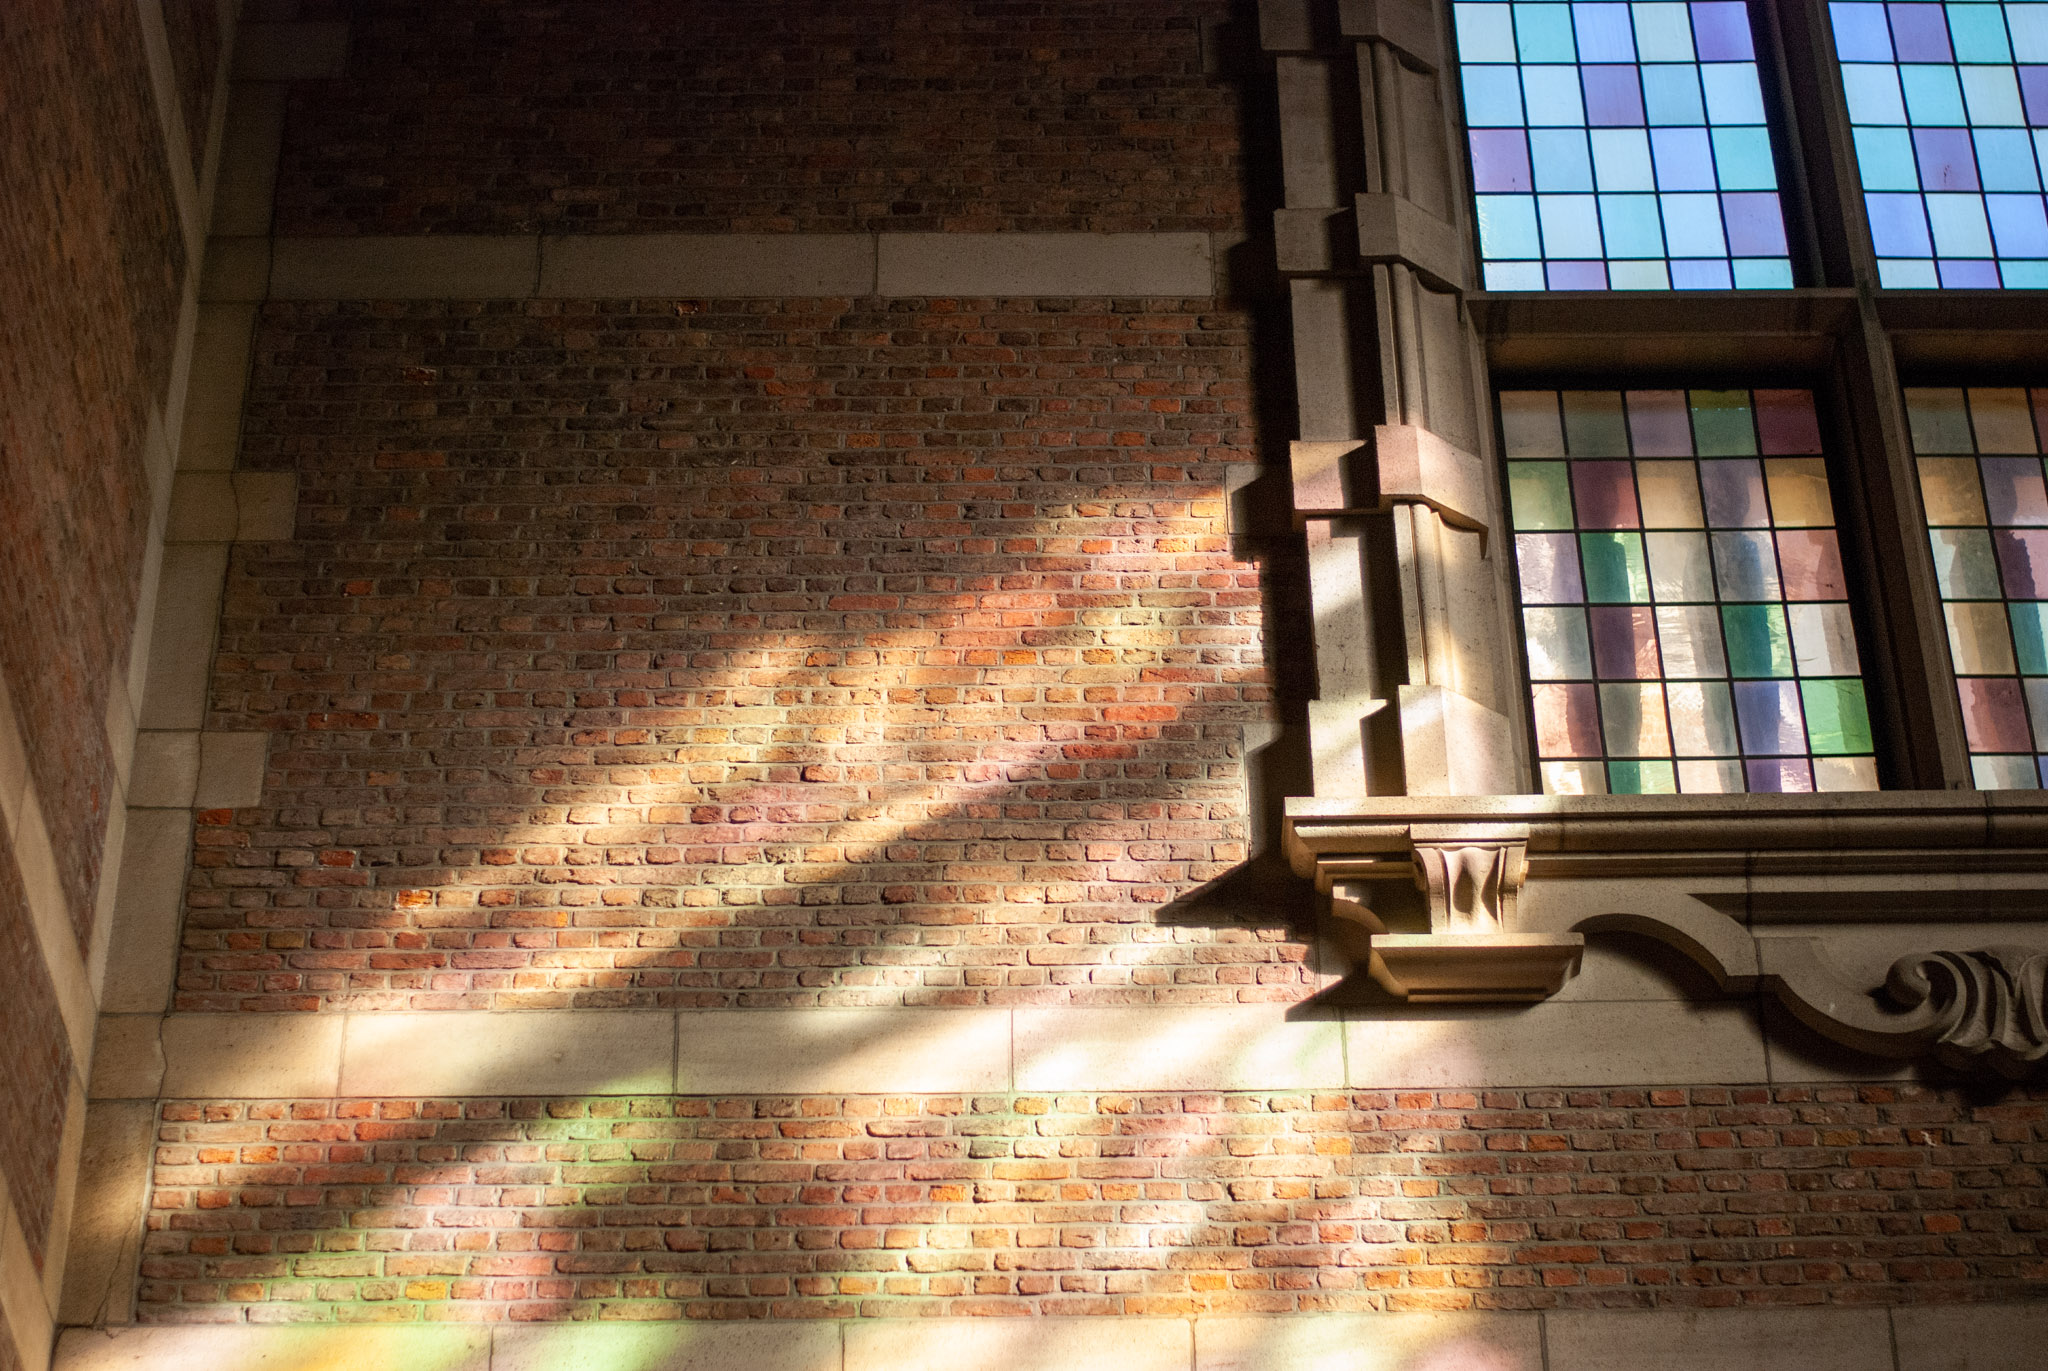 Reflect of church window